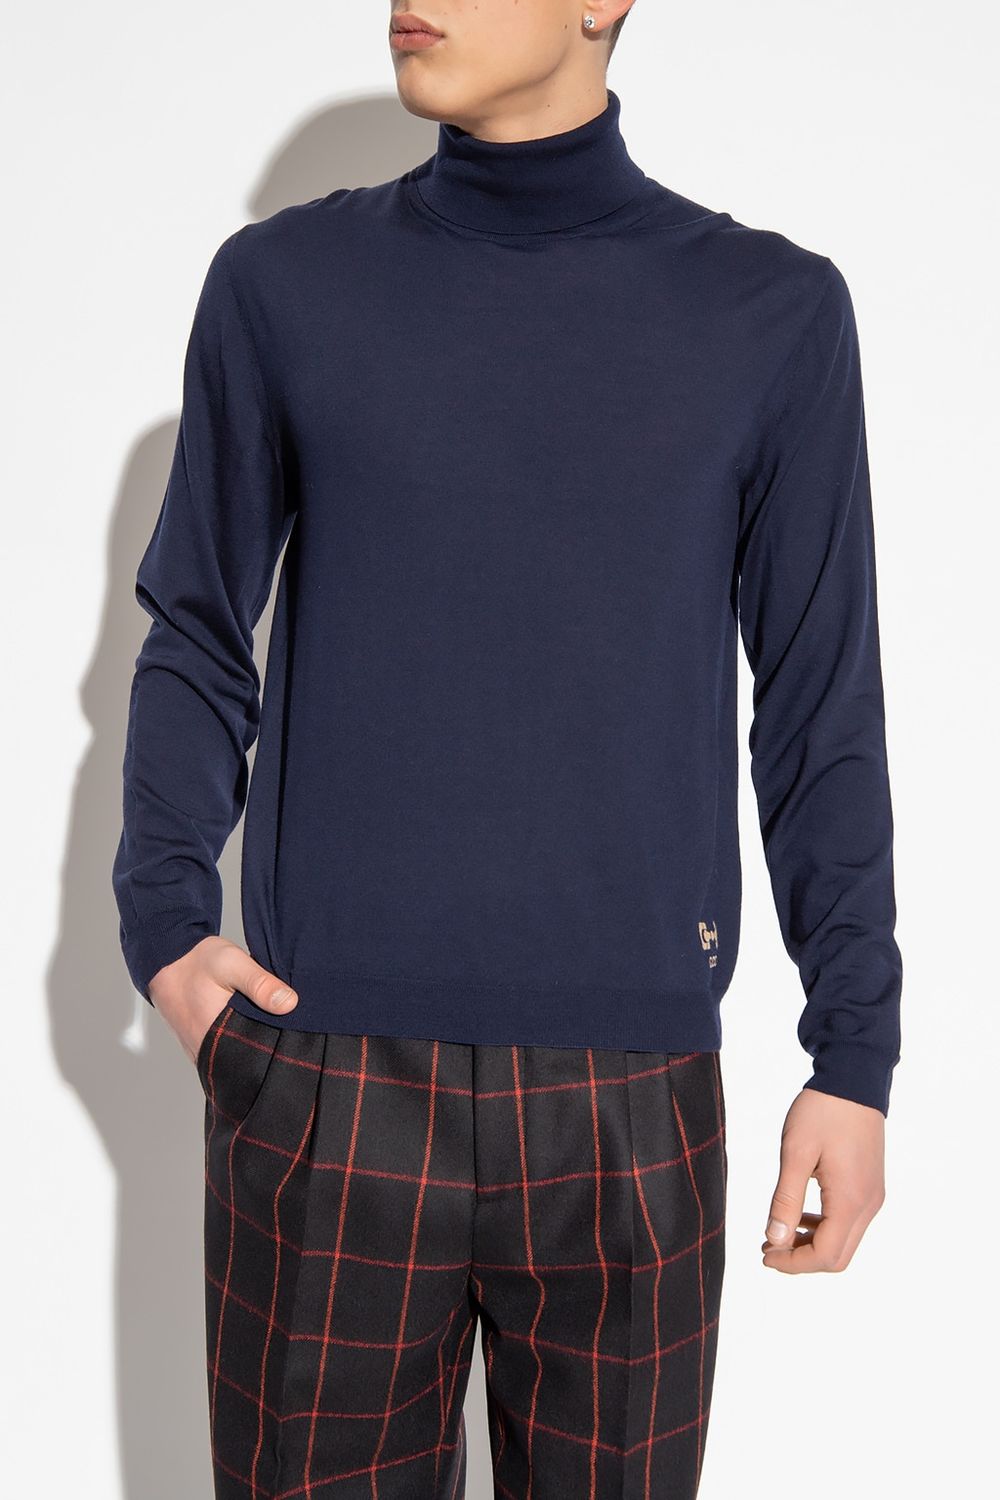 Men's Blue Long Sleeve Turtleneck Wool Sweater for SS23